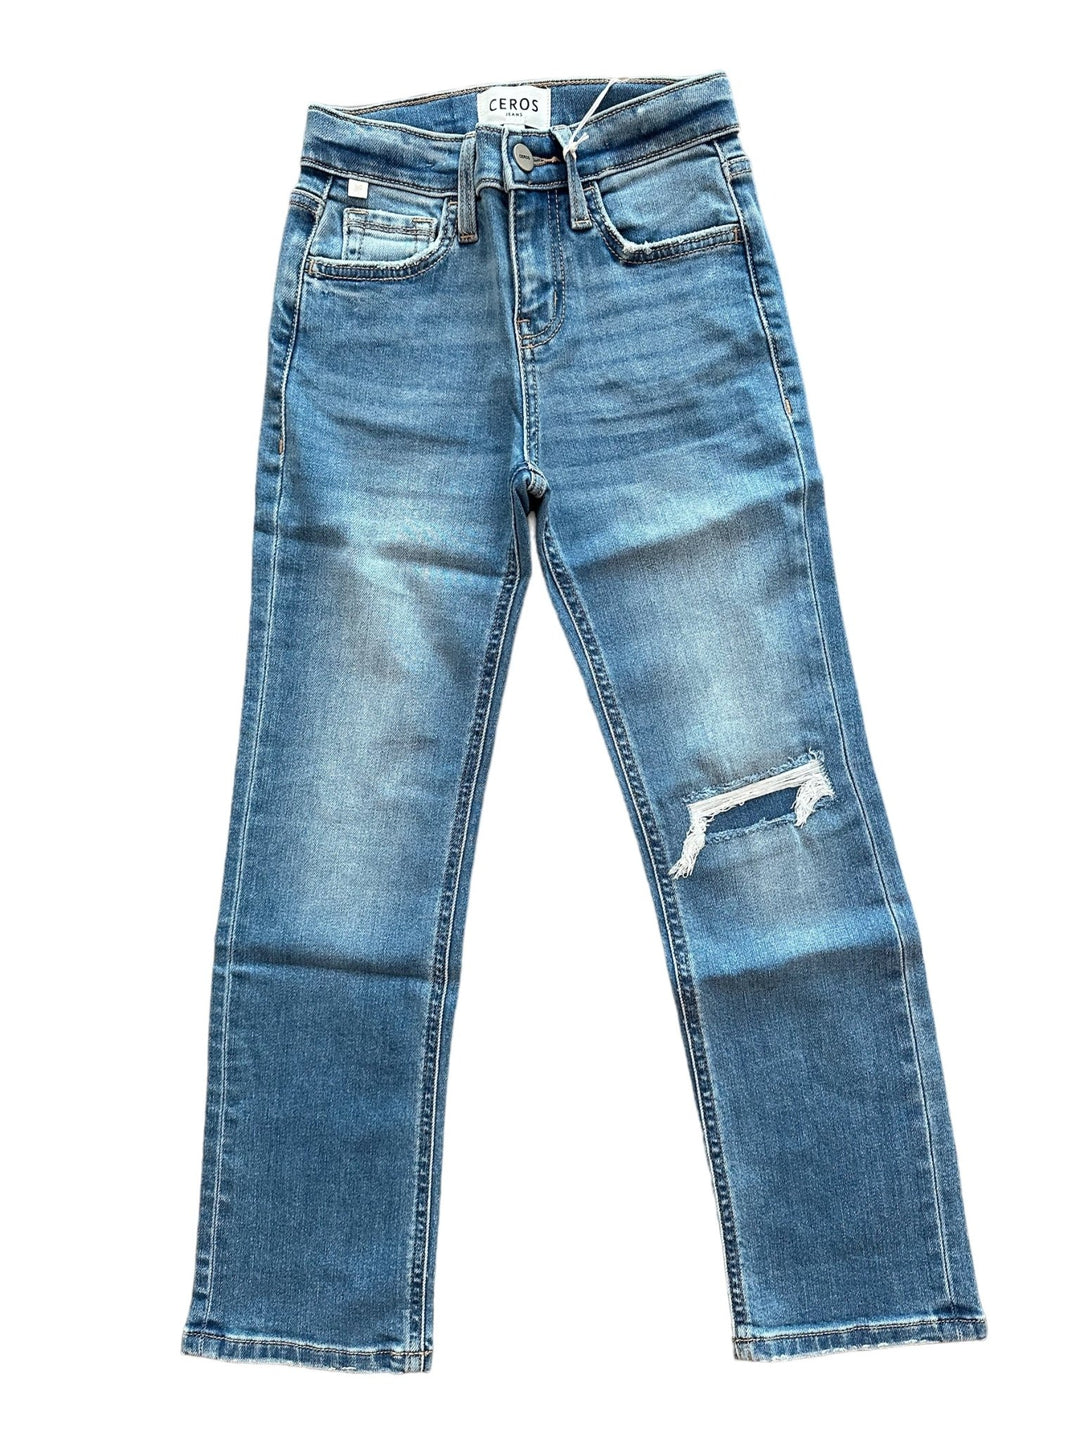 Ceros 90's Vintage Dad Jeans - jernijacks